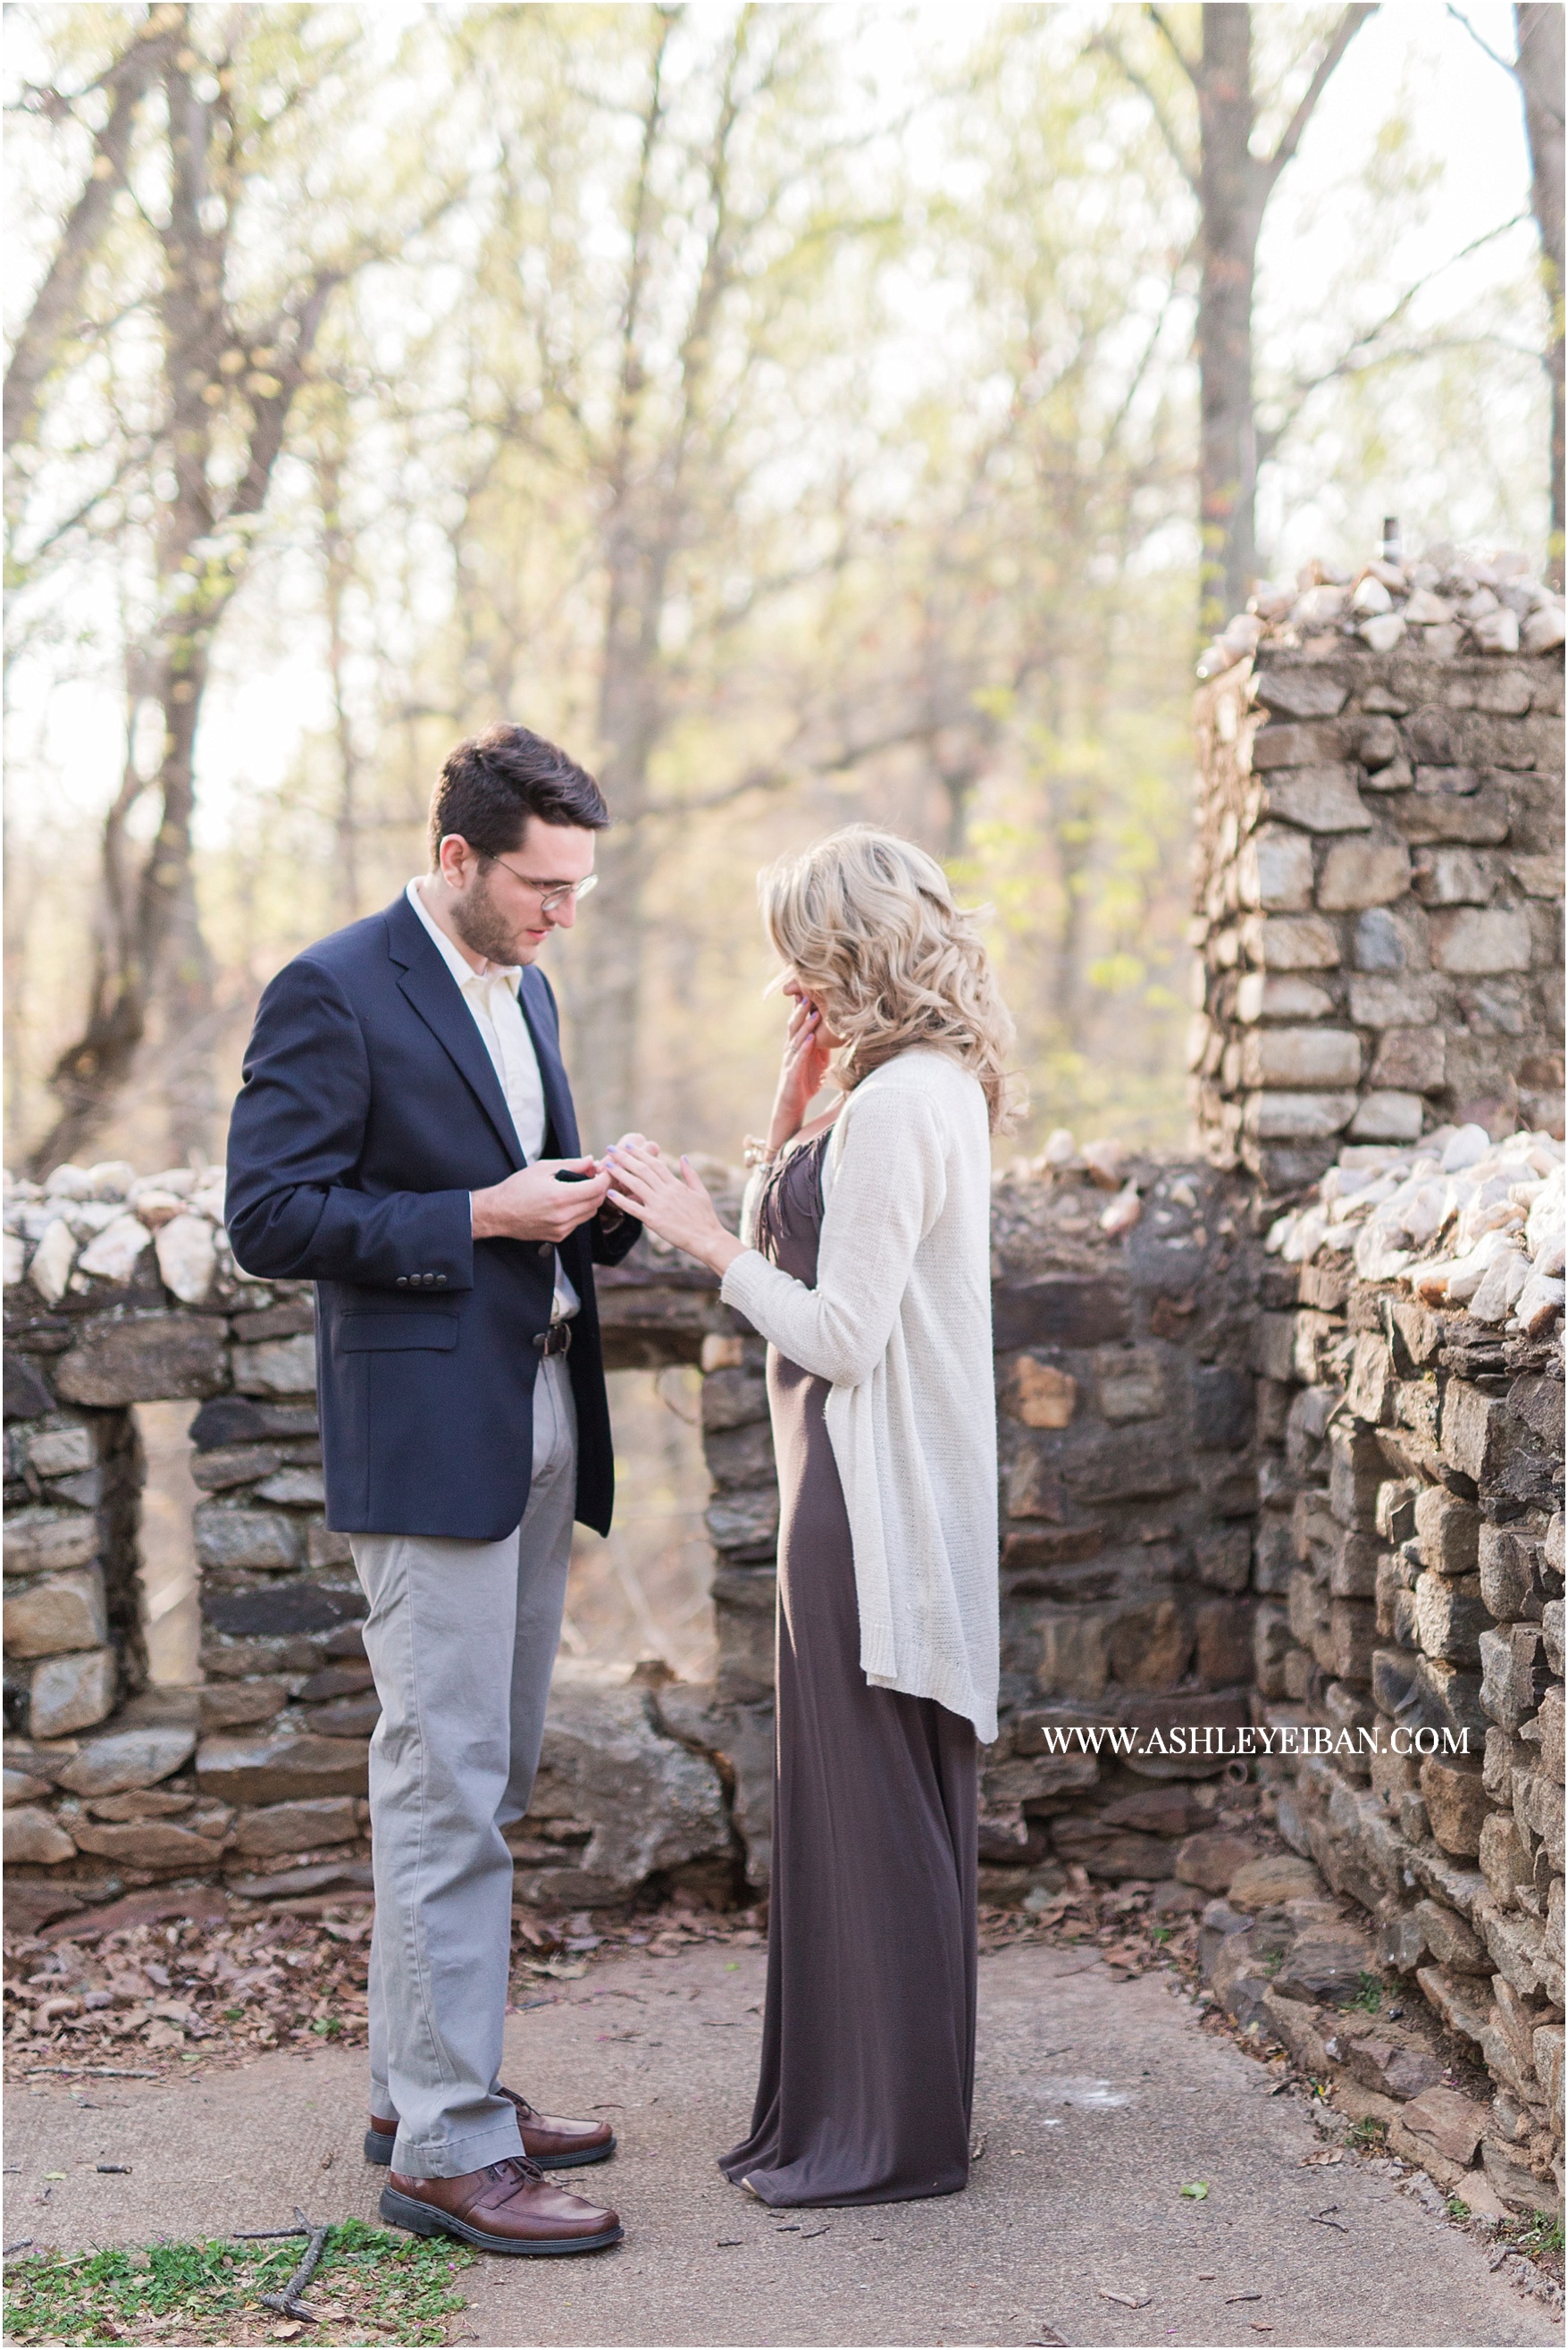 Lynchburg Proposal Photographer || Lynchburg Wedding Photographer || Central VA Wedding Photographer || Lynchburg Engagement Photos || Ashley Eiban Photography || www.ashleyeiban.com